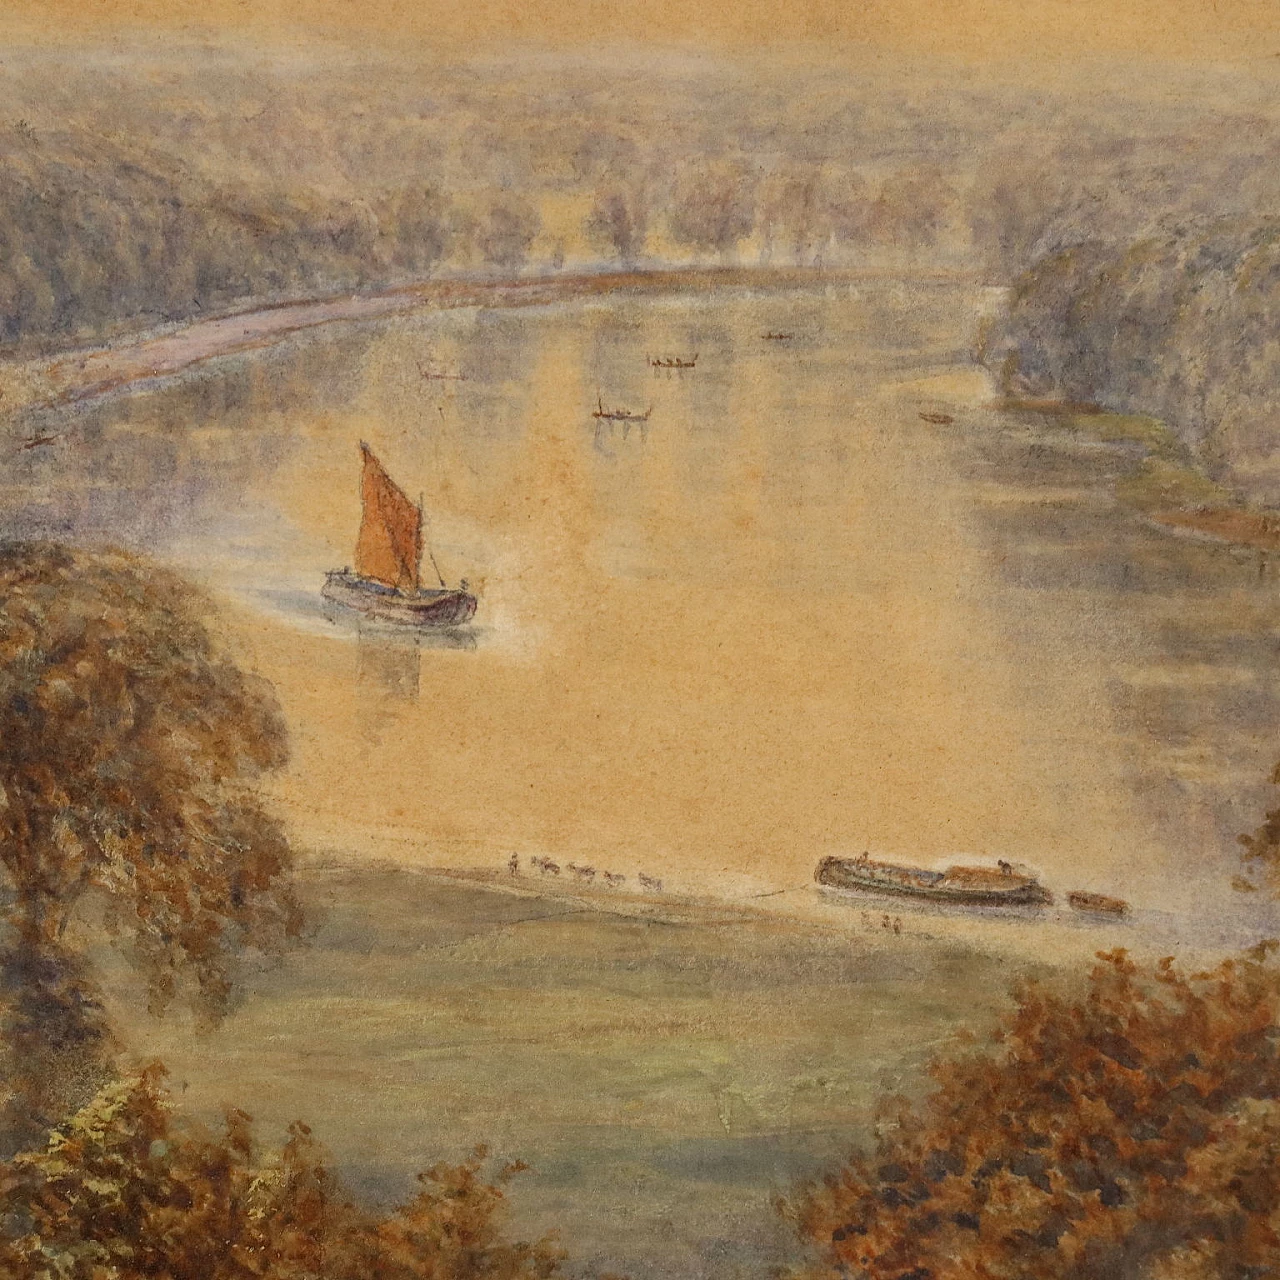 H.C. Warren, River landscape with lumberjacks, watercolor, 1878 5